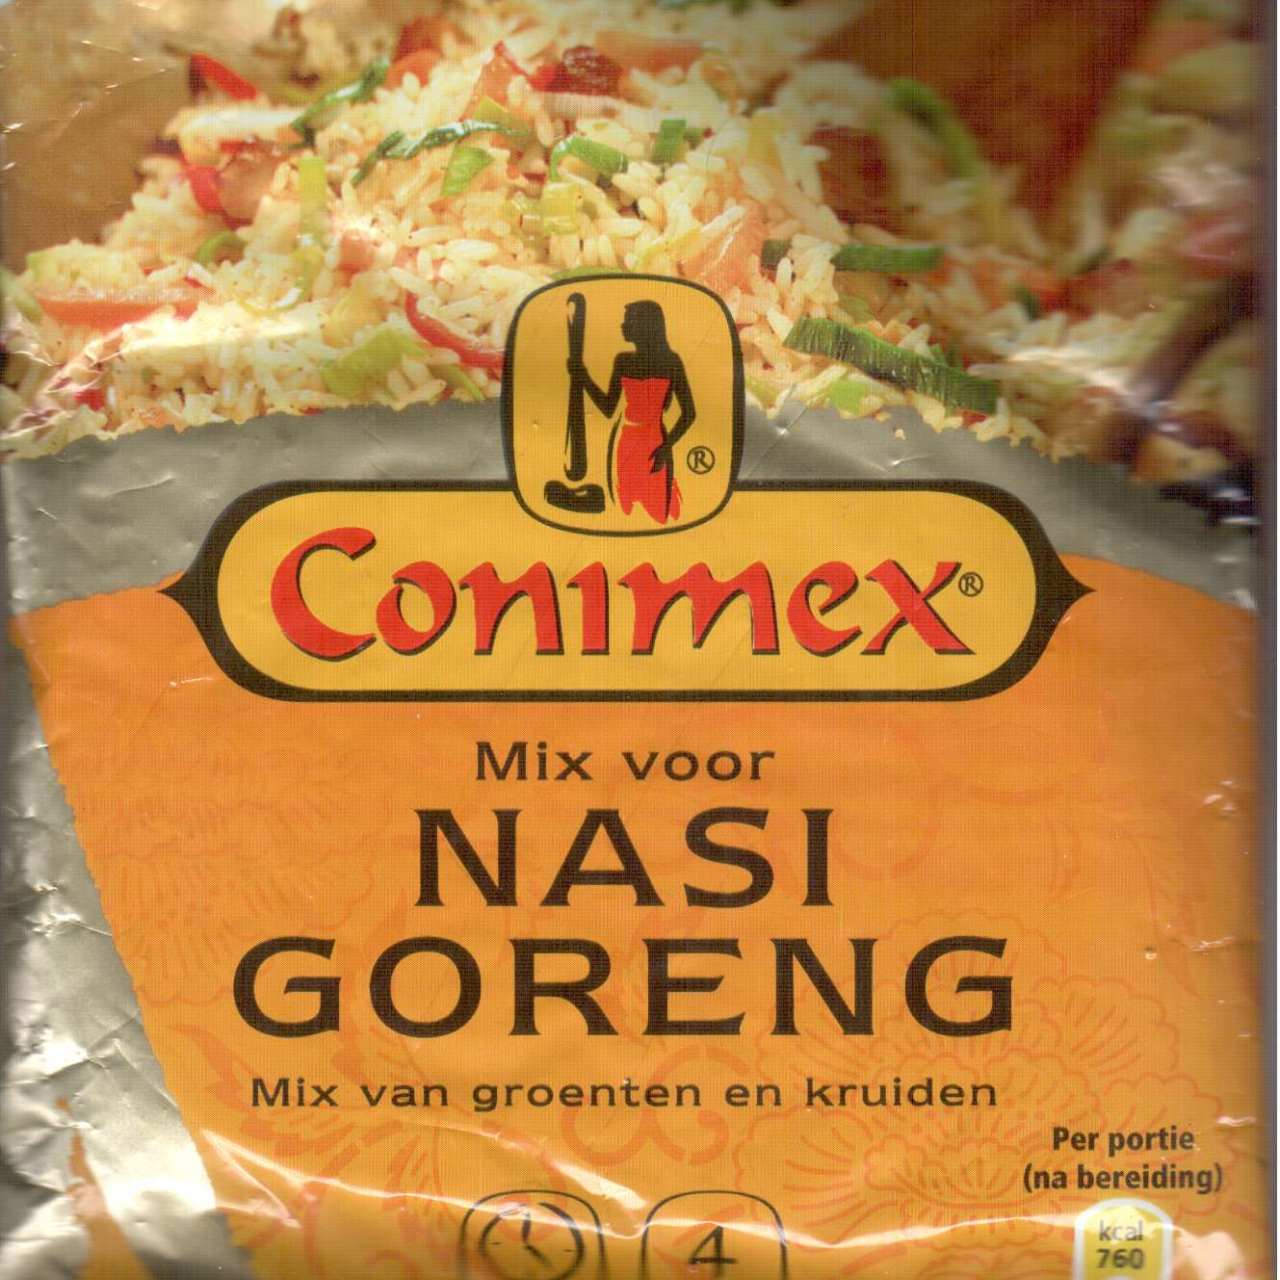 Conimex Goreng